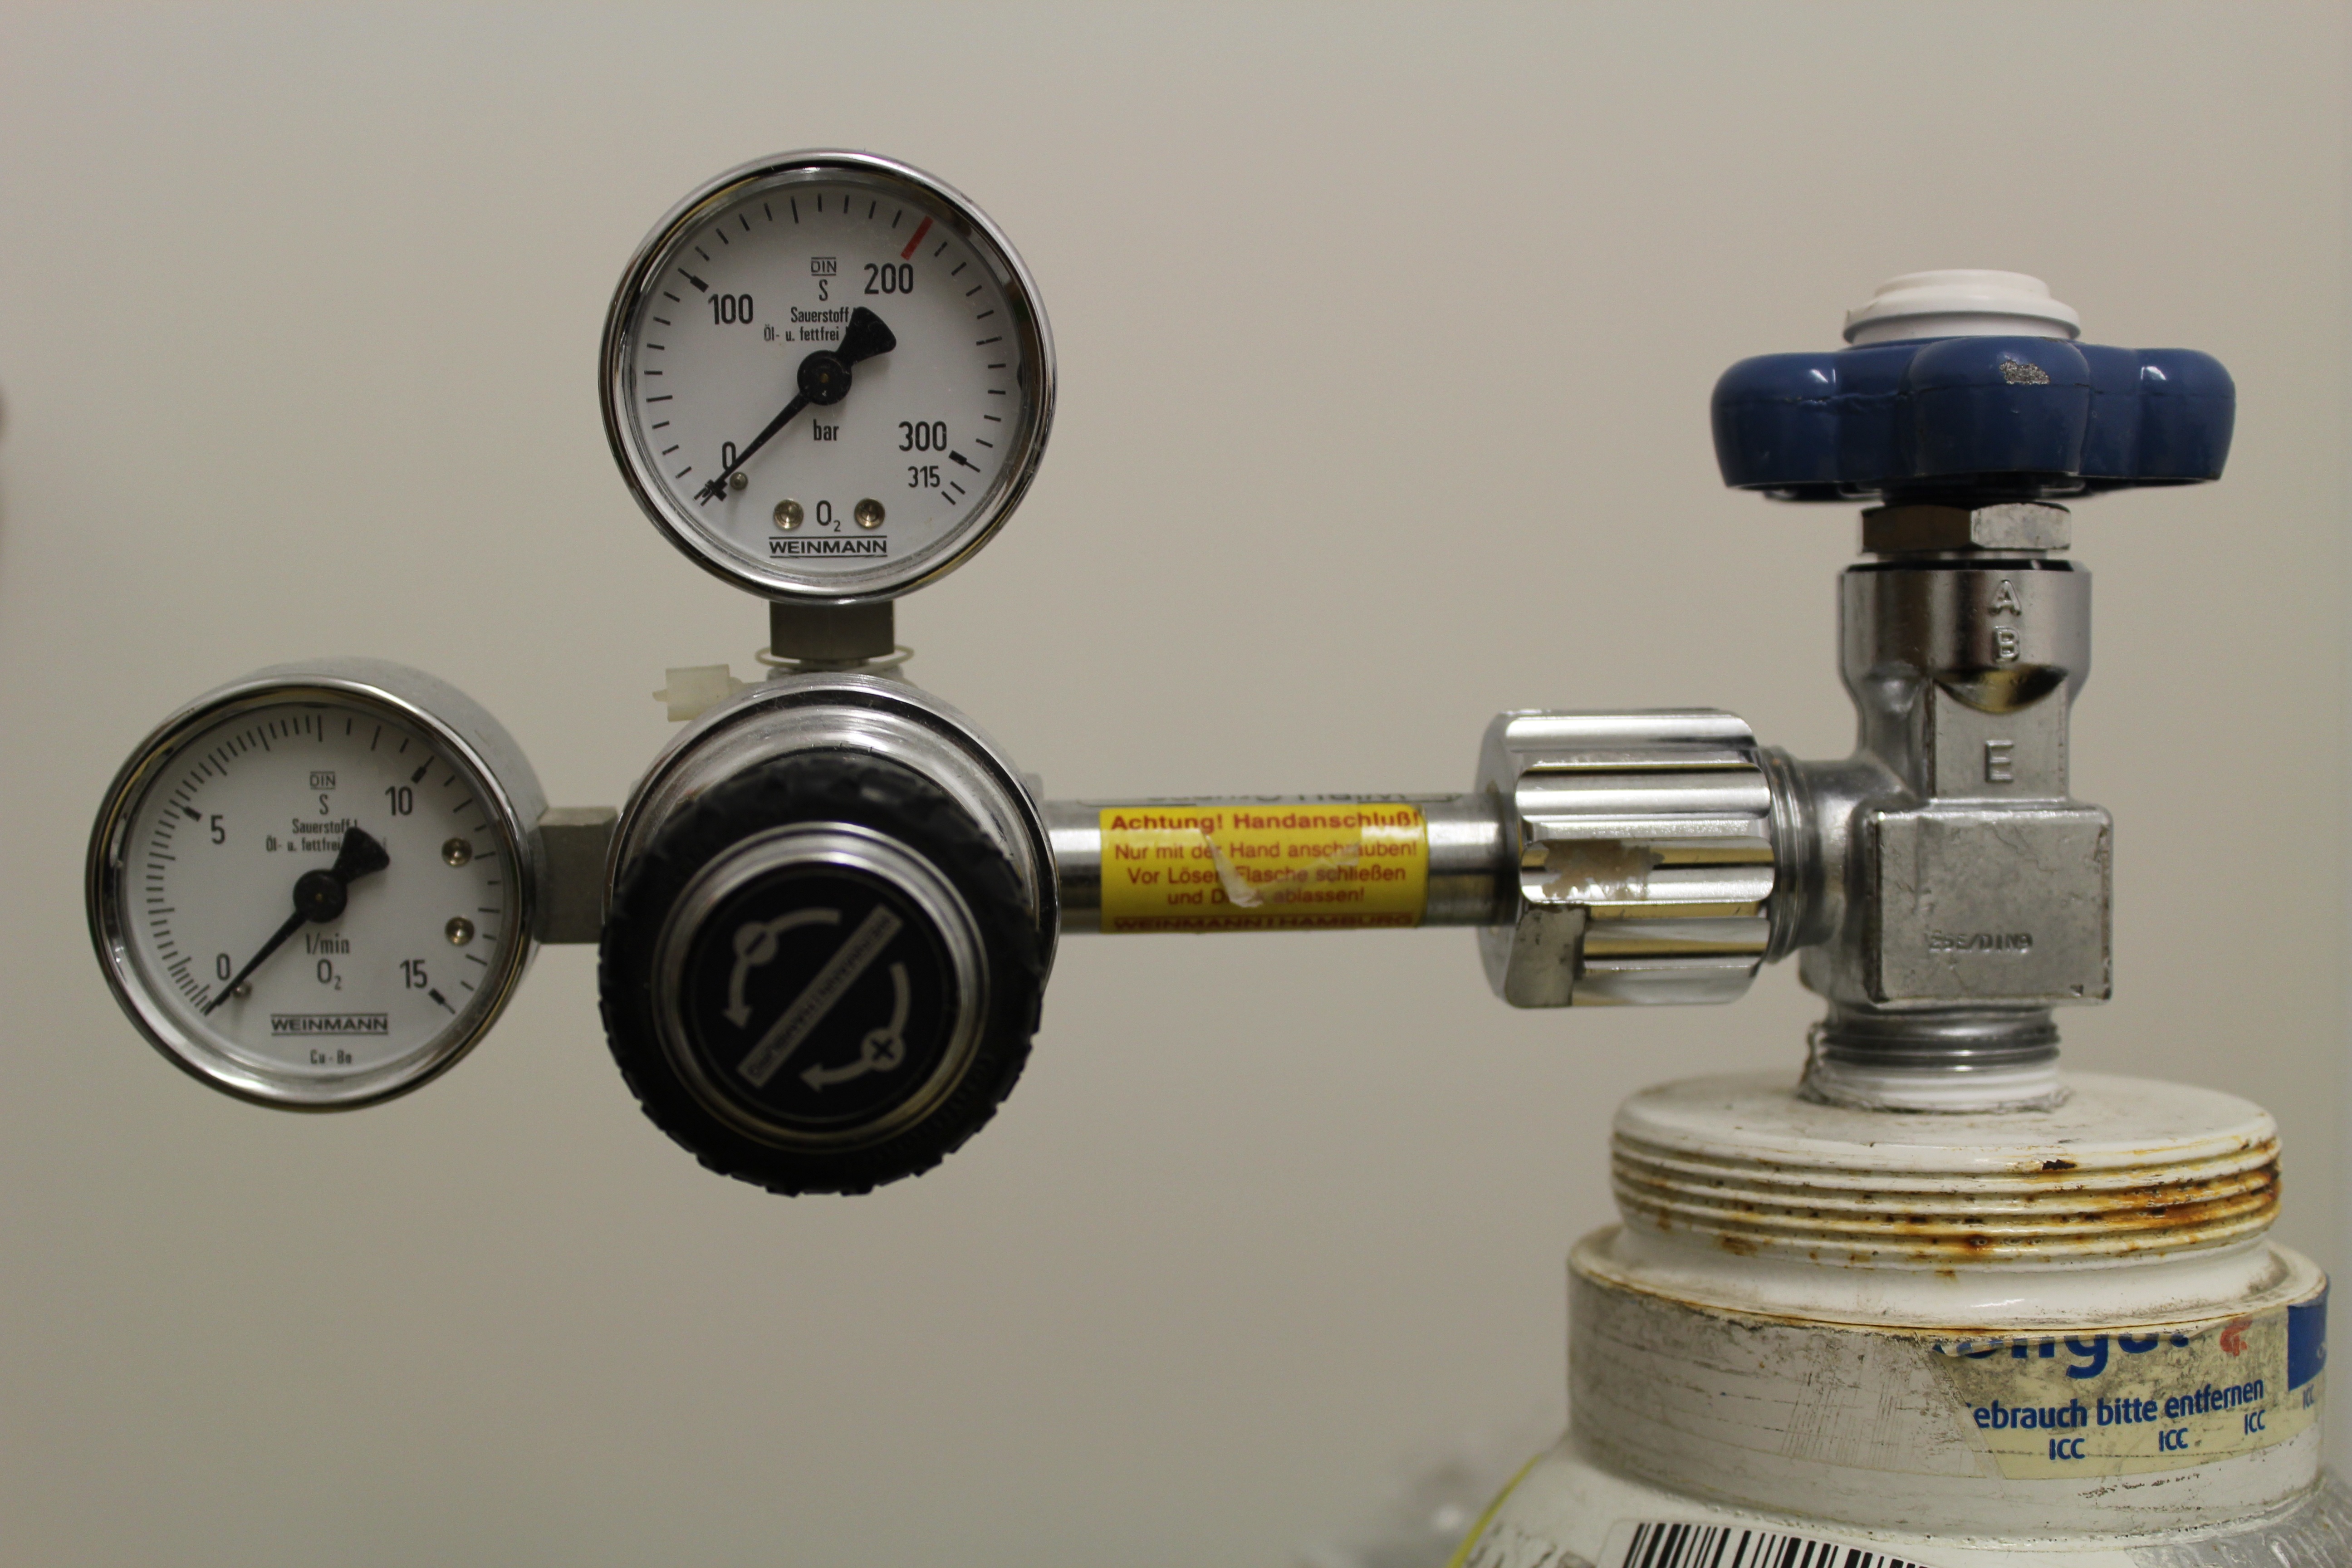 Oxygen gauge on an oxygen tank.